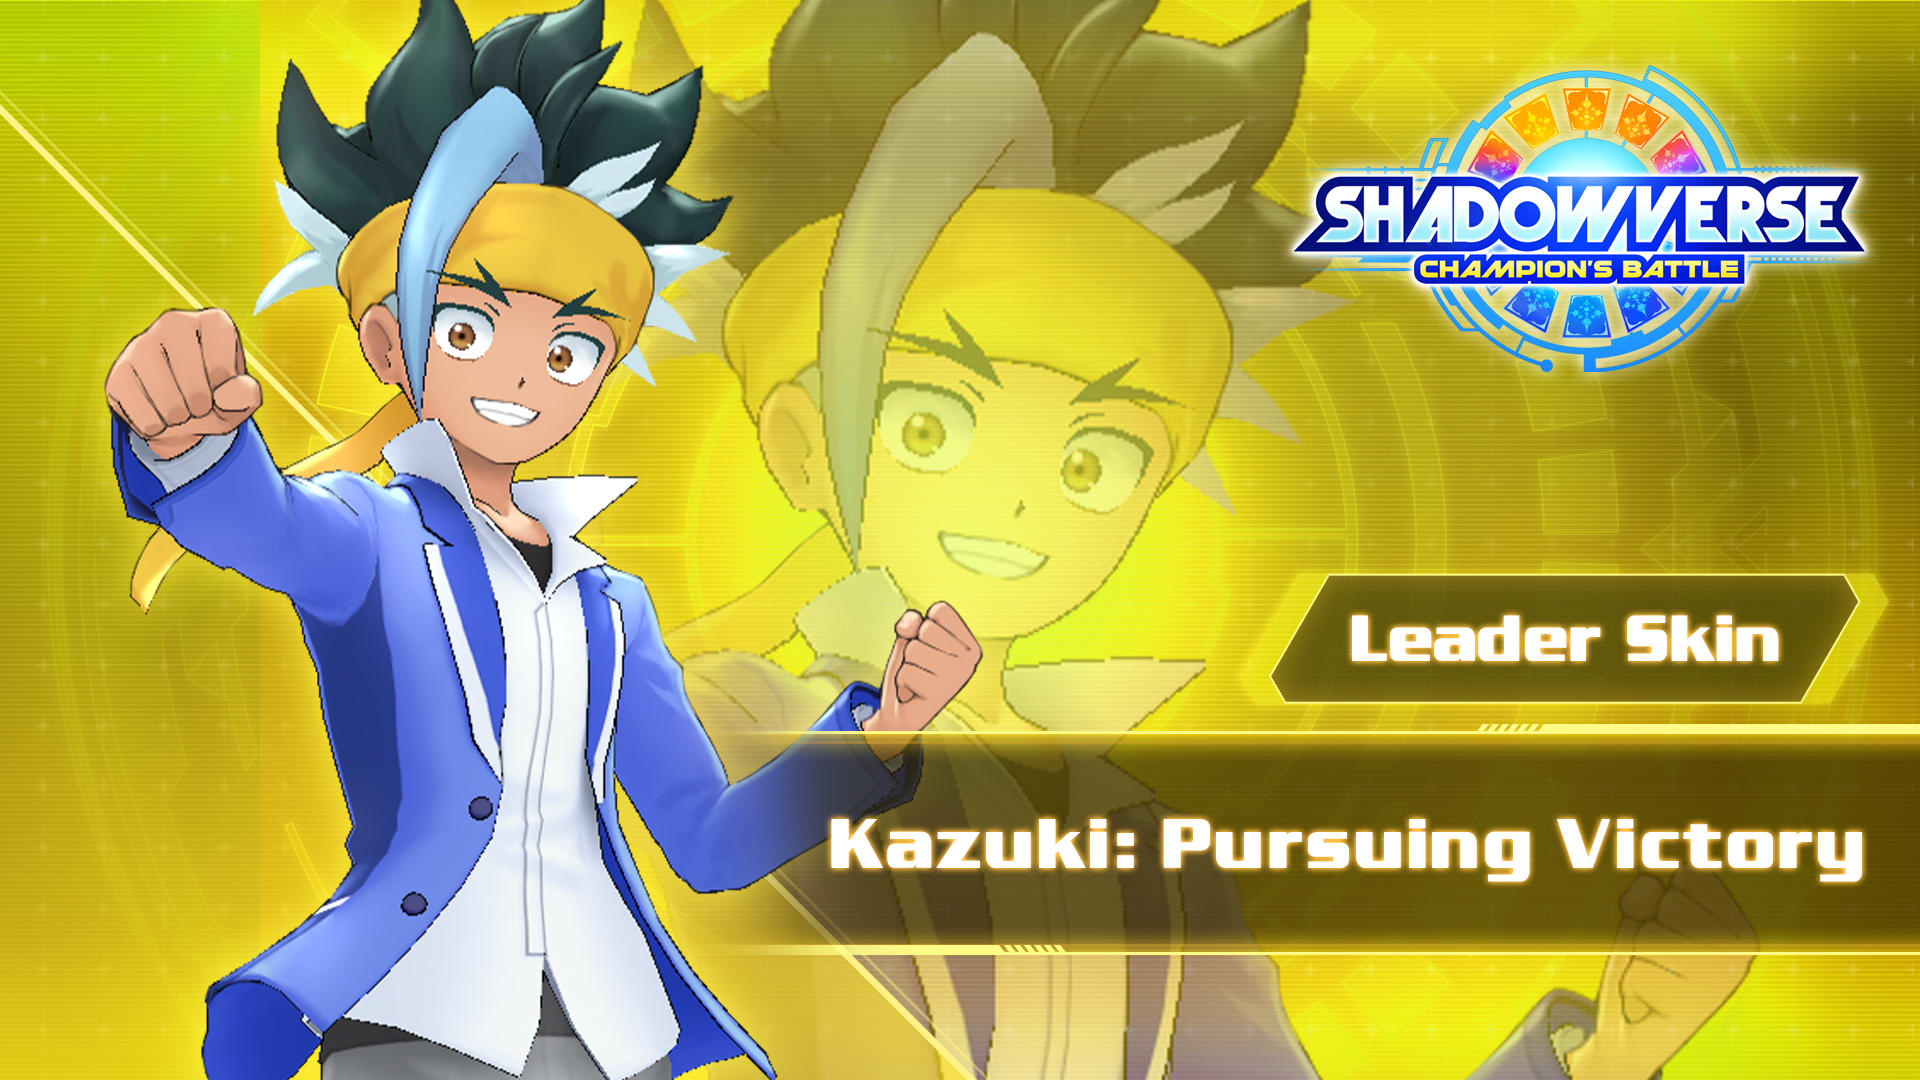 Leader Skin: "Kazuki: Pursuing Victory"